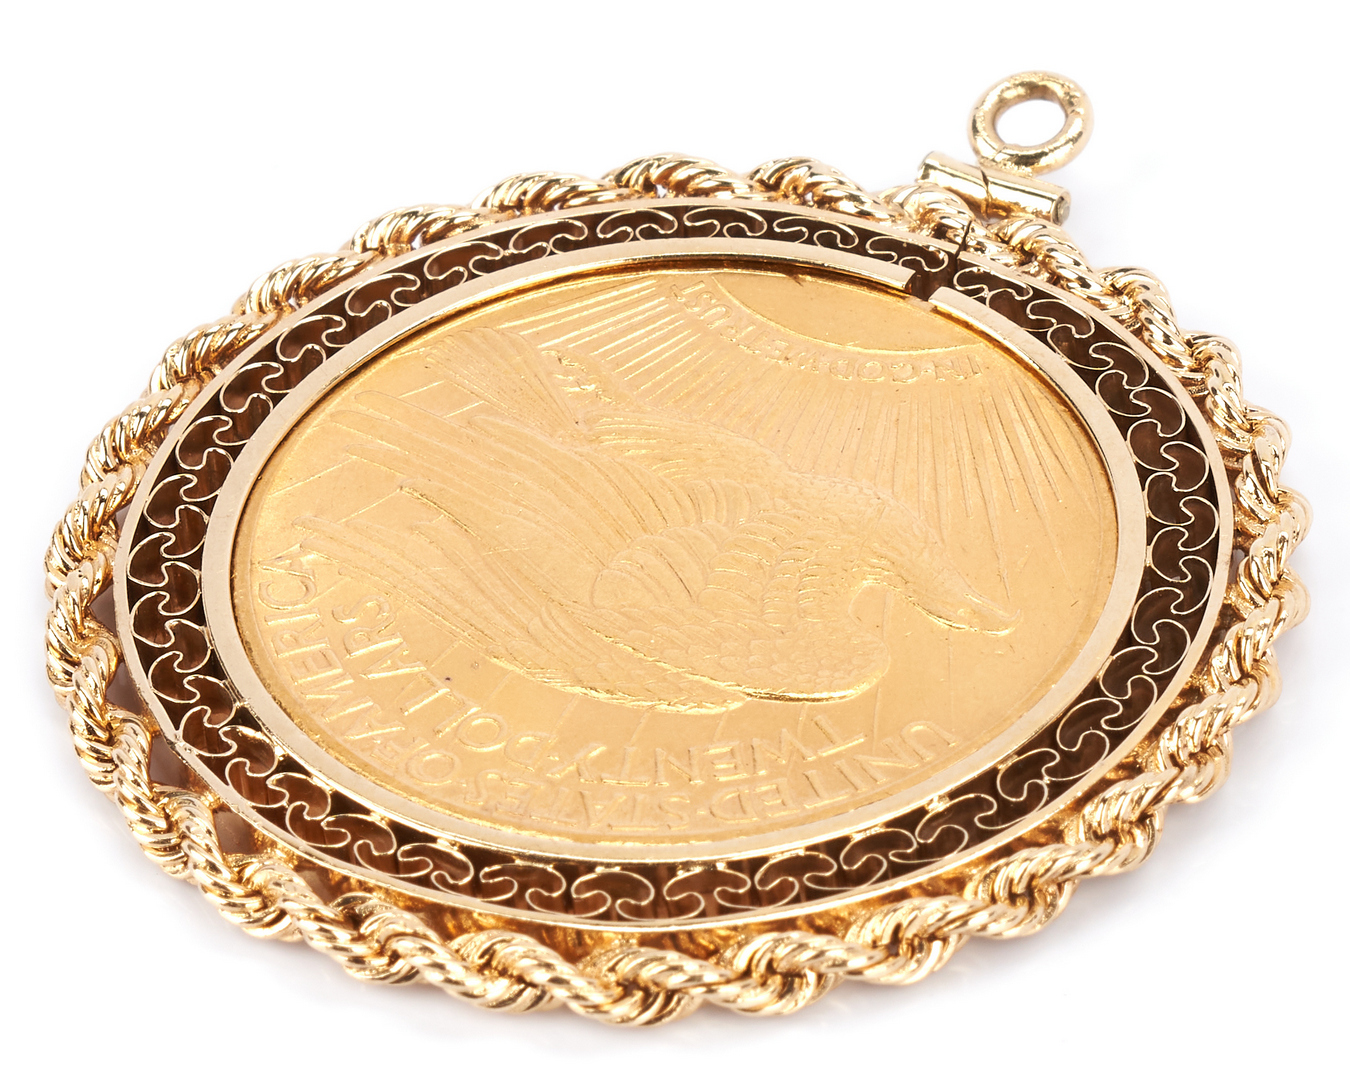 Lot 755: 1924 20 Dollar Saint Gaudens Gold Piece in 14K Bezel